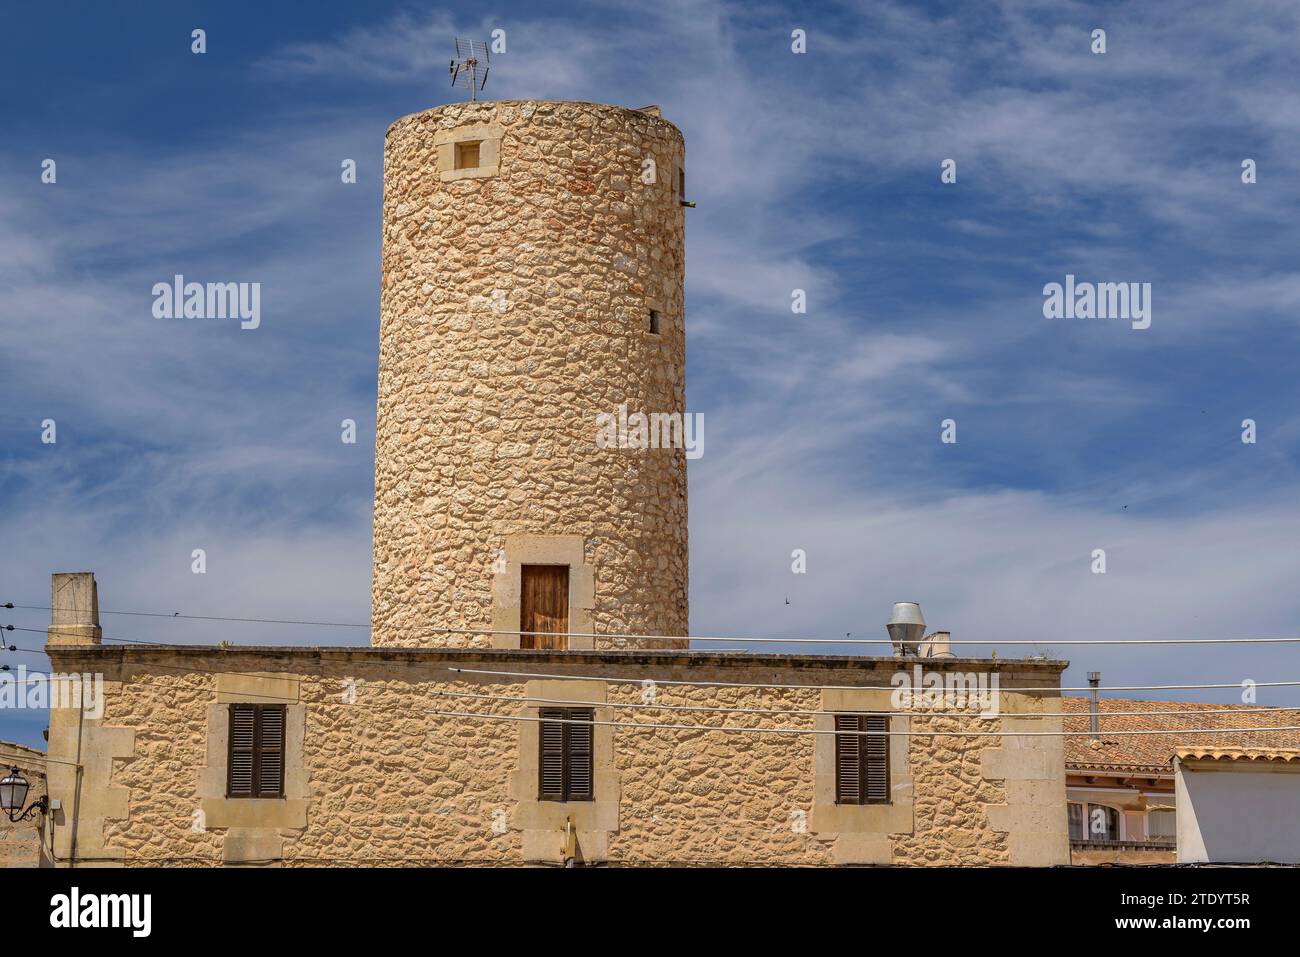 The windmill Molí d'en Negre, in the village of Porreres (Mallorca, Balearic Islands, Spain) ESP: El molino d'en Negre, en el pueblo de Porreres Stock Photo